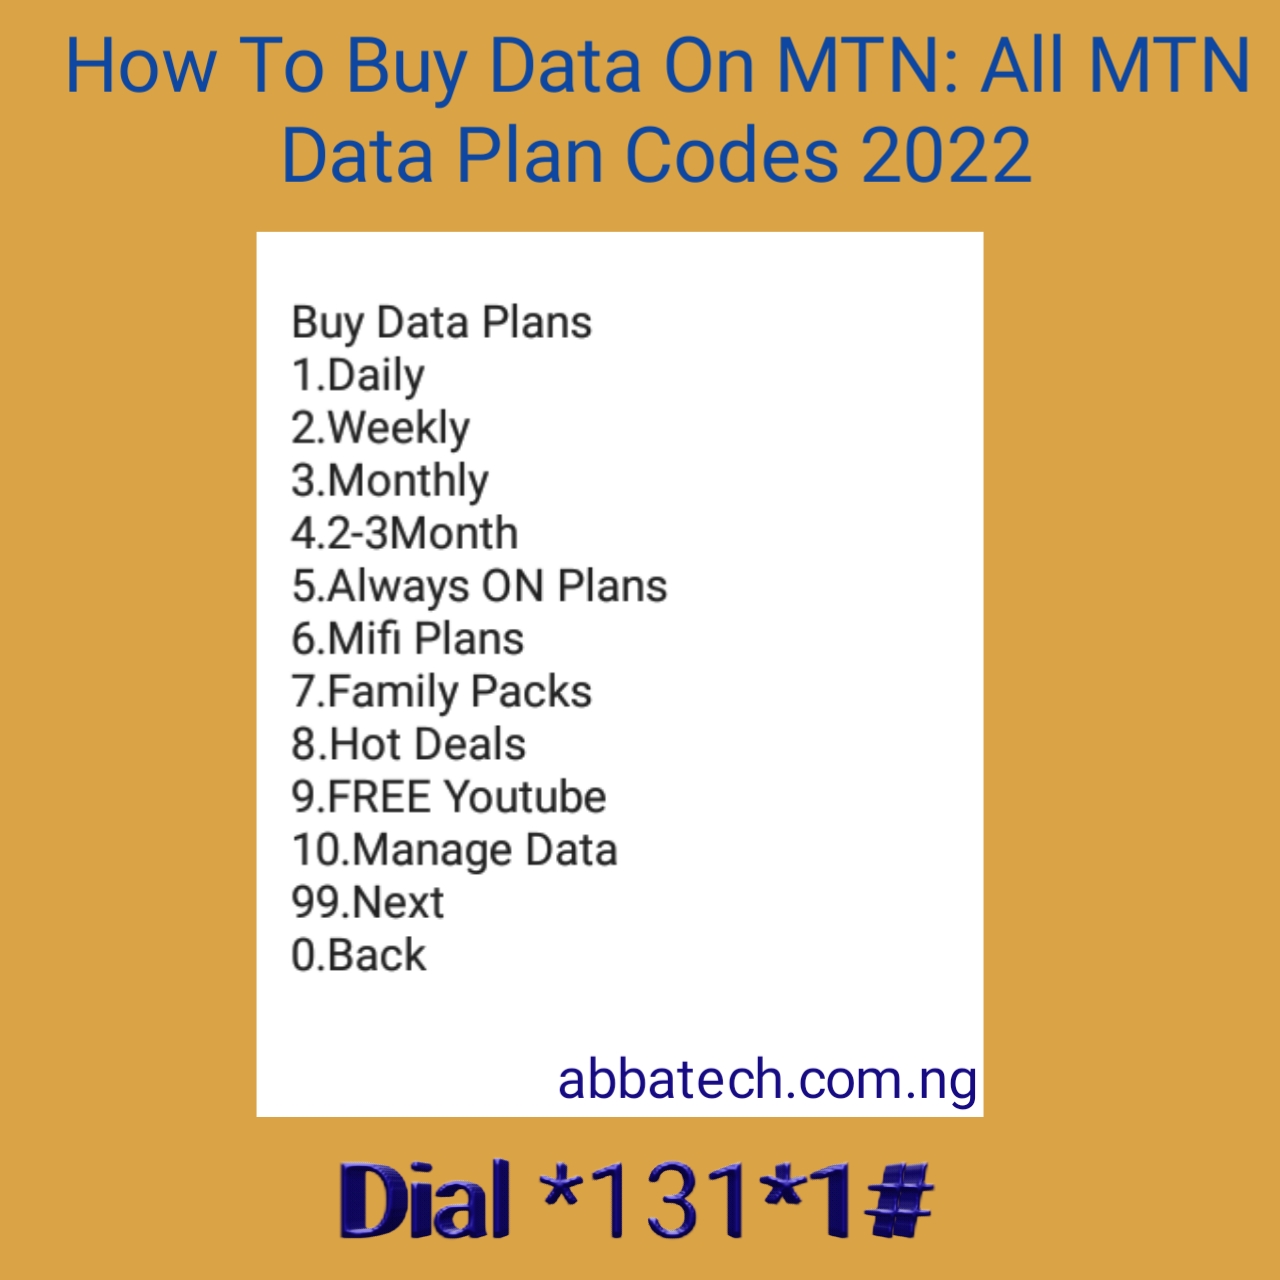 How To Buy Data On MTN: All MTN Data Plan Codes 2022